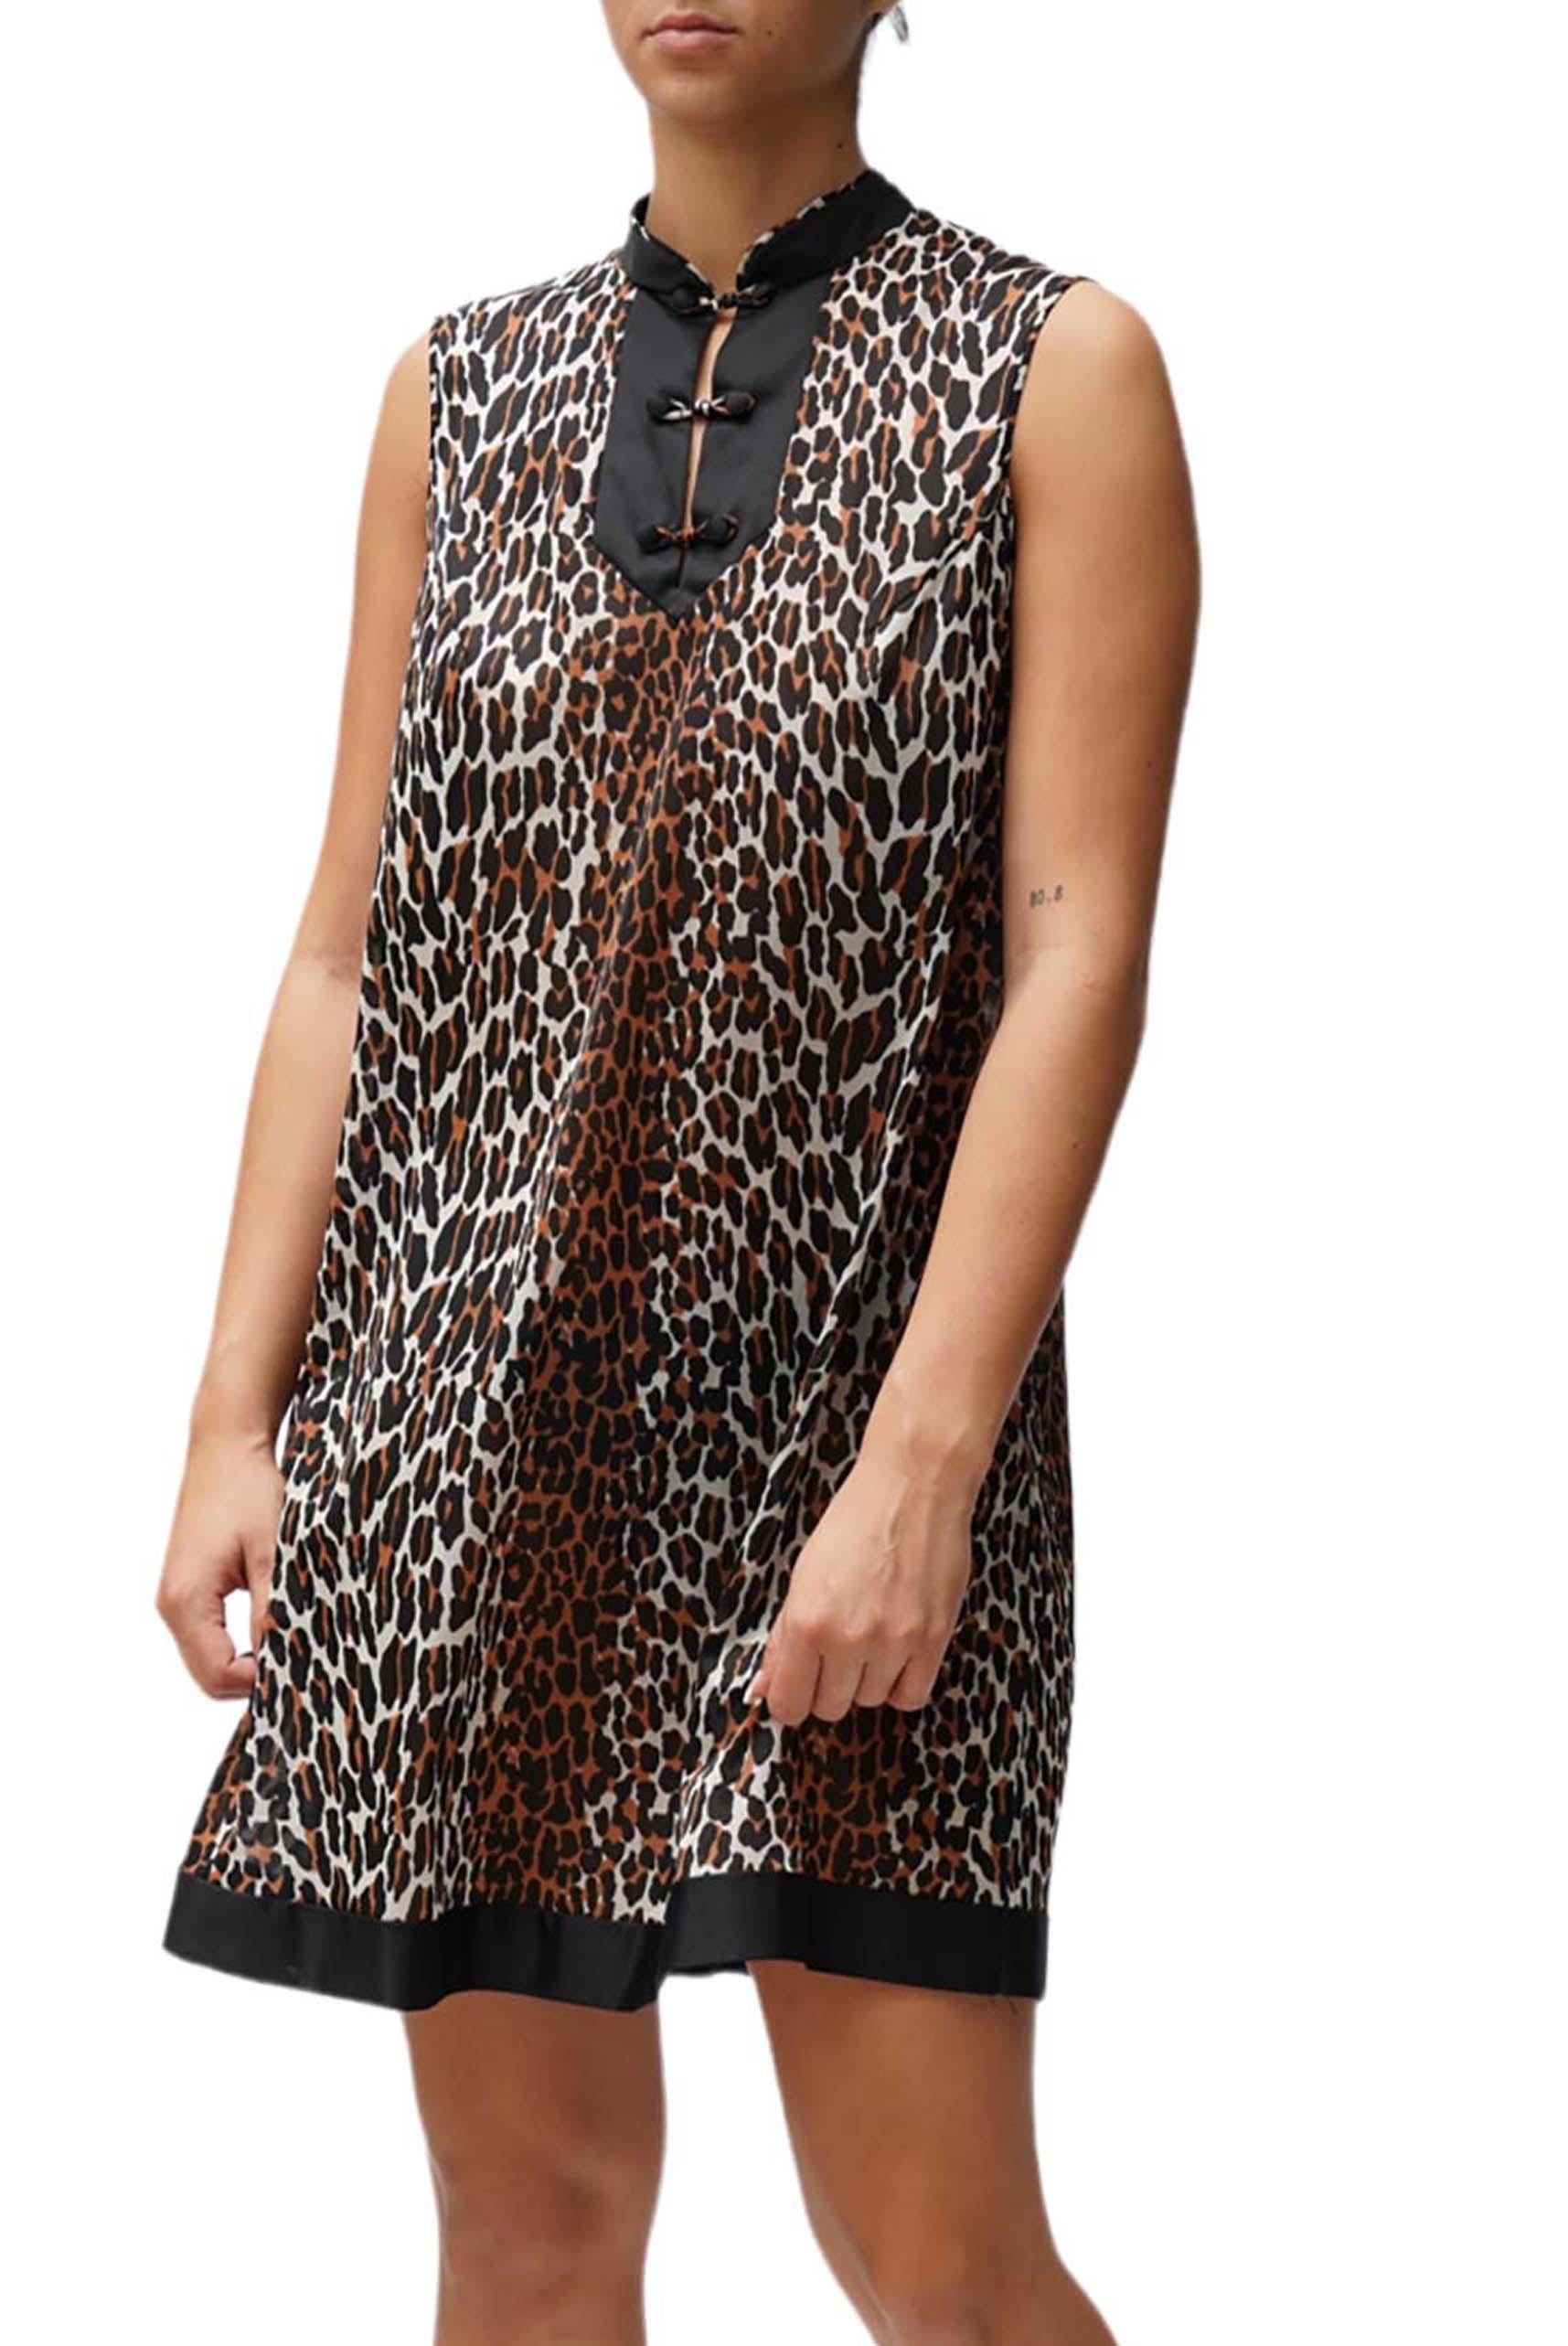 1960S Leopard Print Nylon Tricot Jersey Mod Slip Dress Negligee For Sale 5